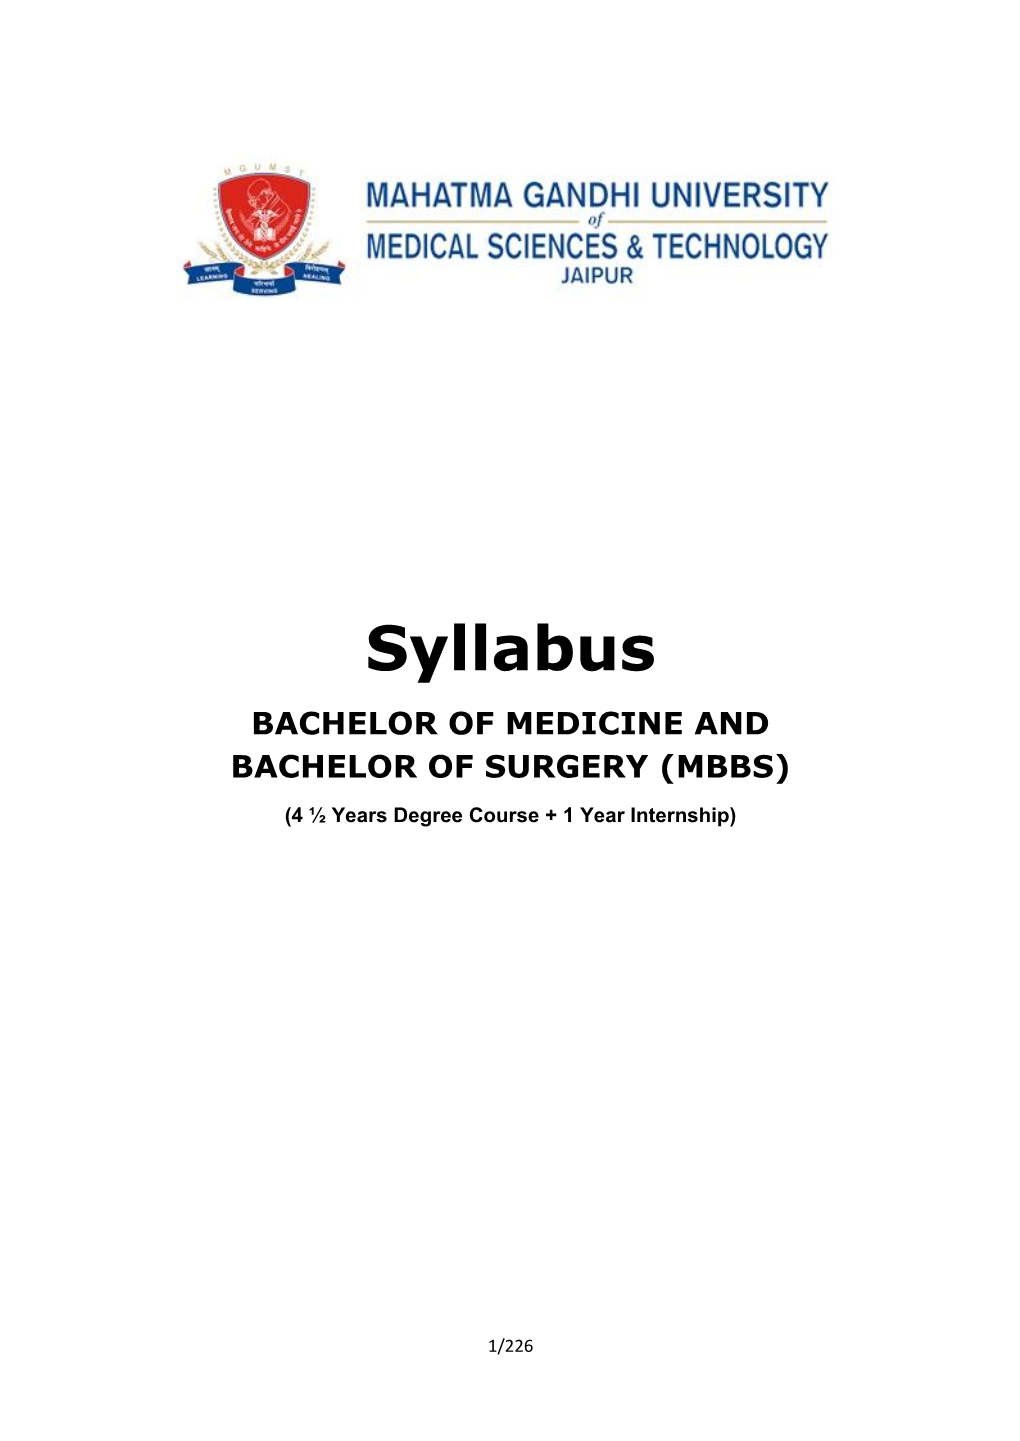 MBBS Syllabus